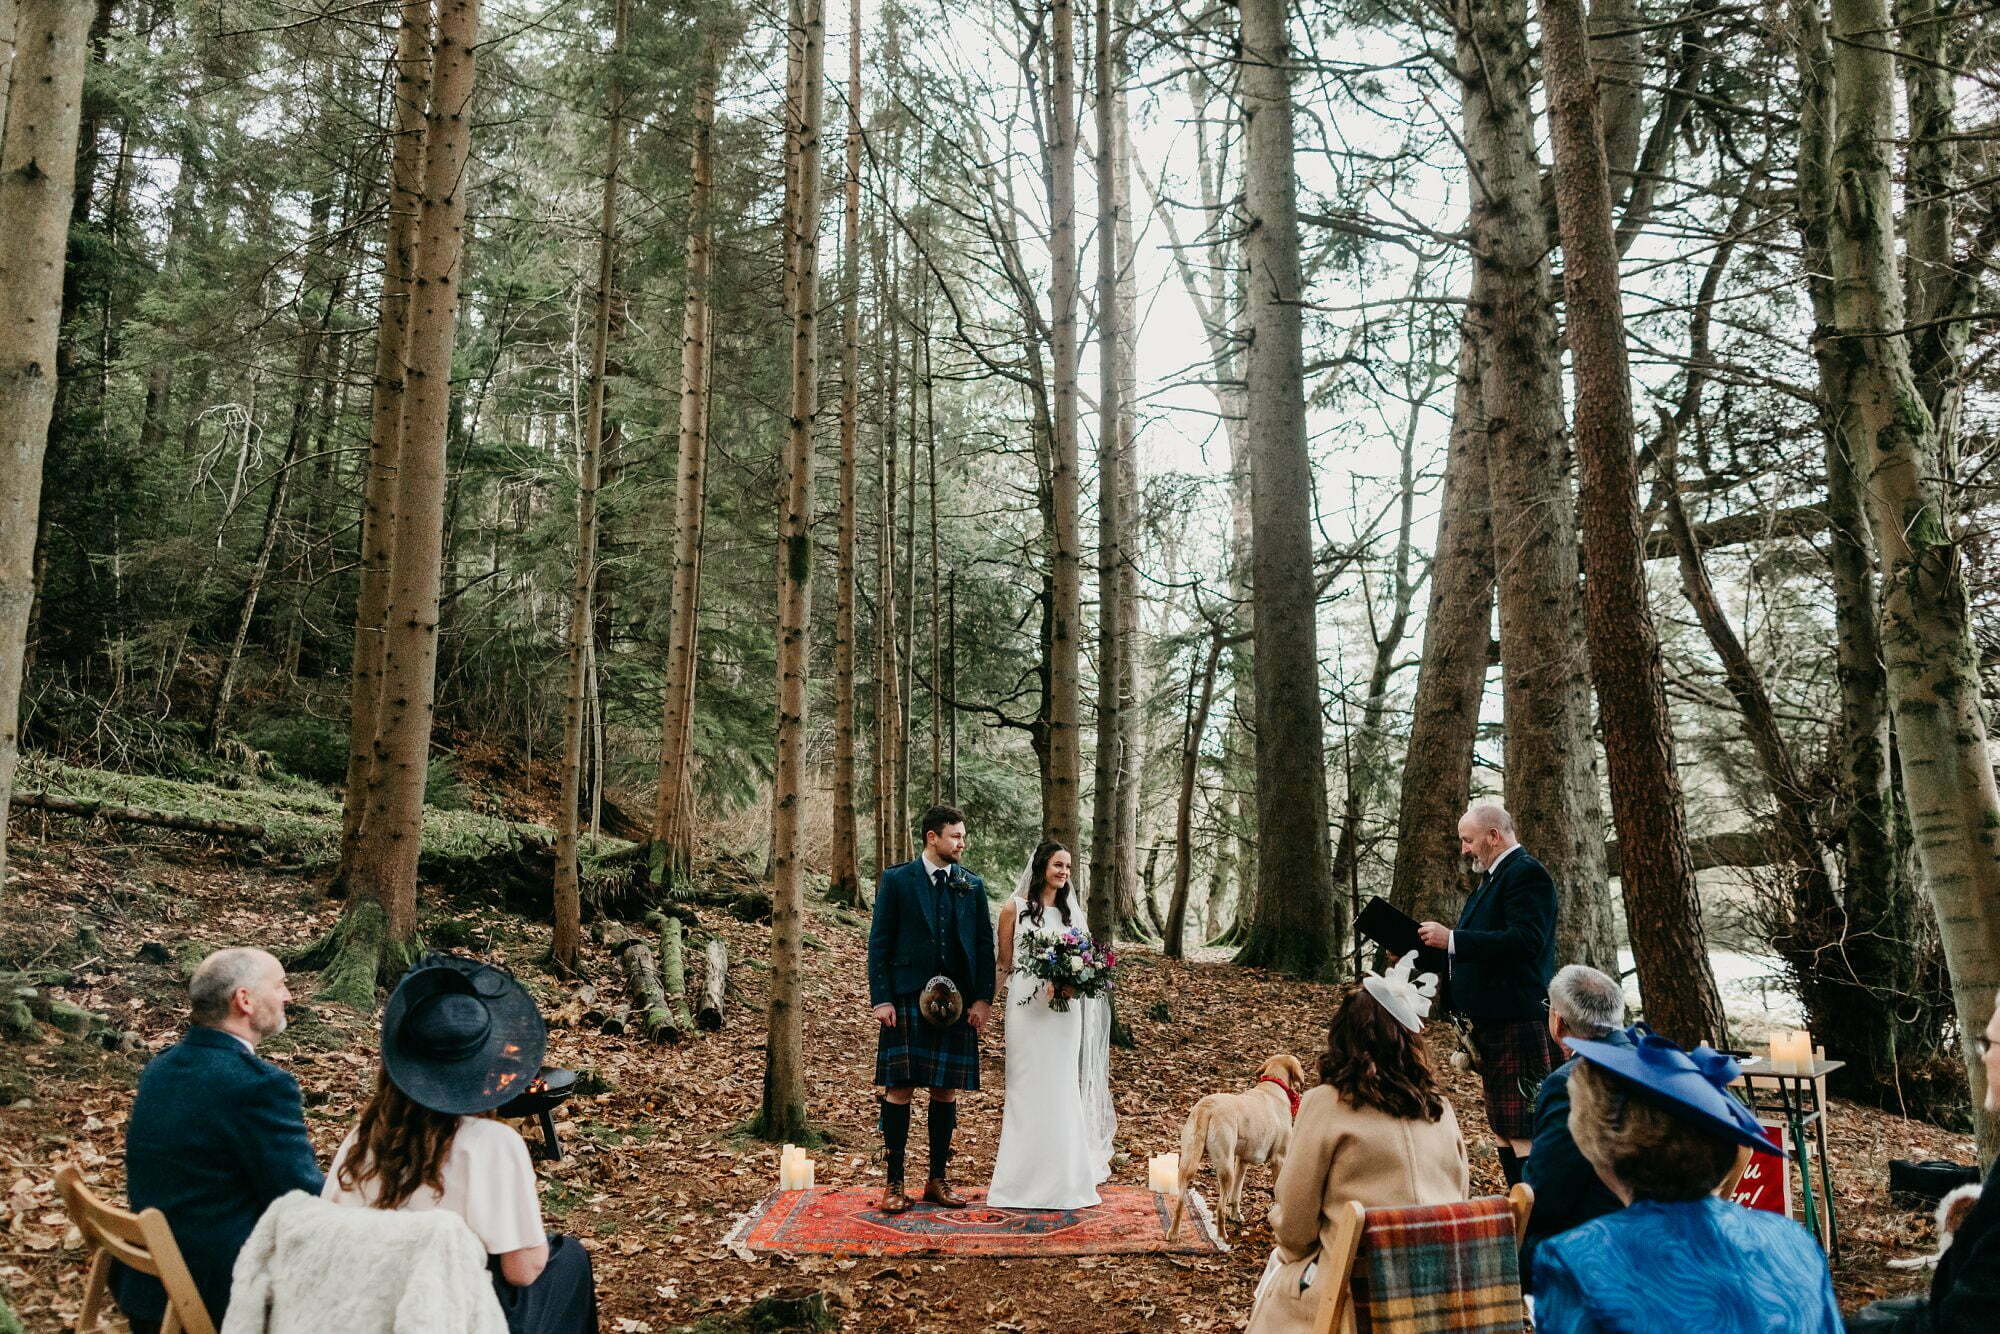 GLENDYE ESTATE WEDDING woodland outdoors aberdeenshire scotland quirky cool venue humanist ceremony